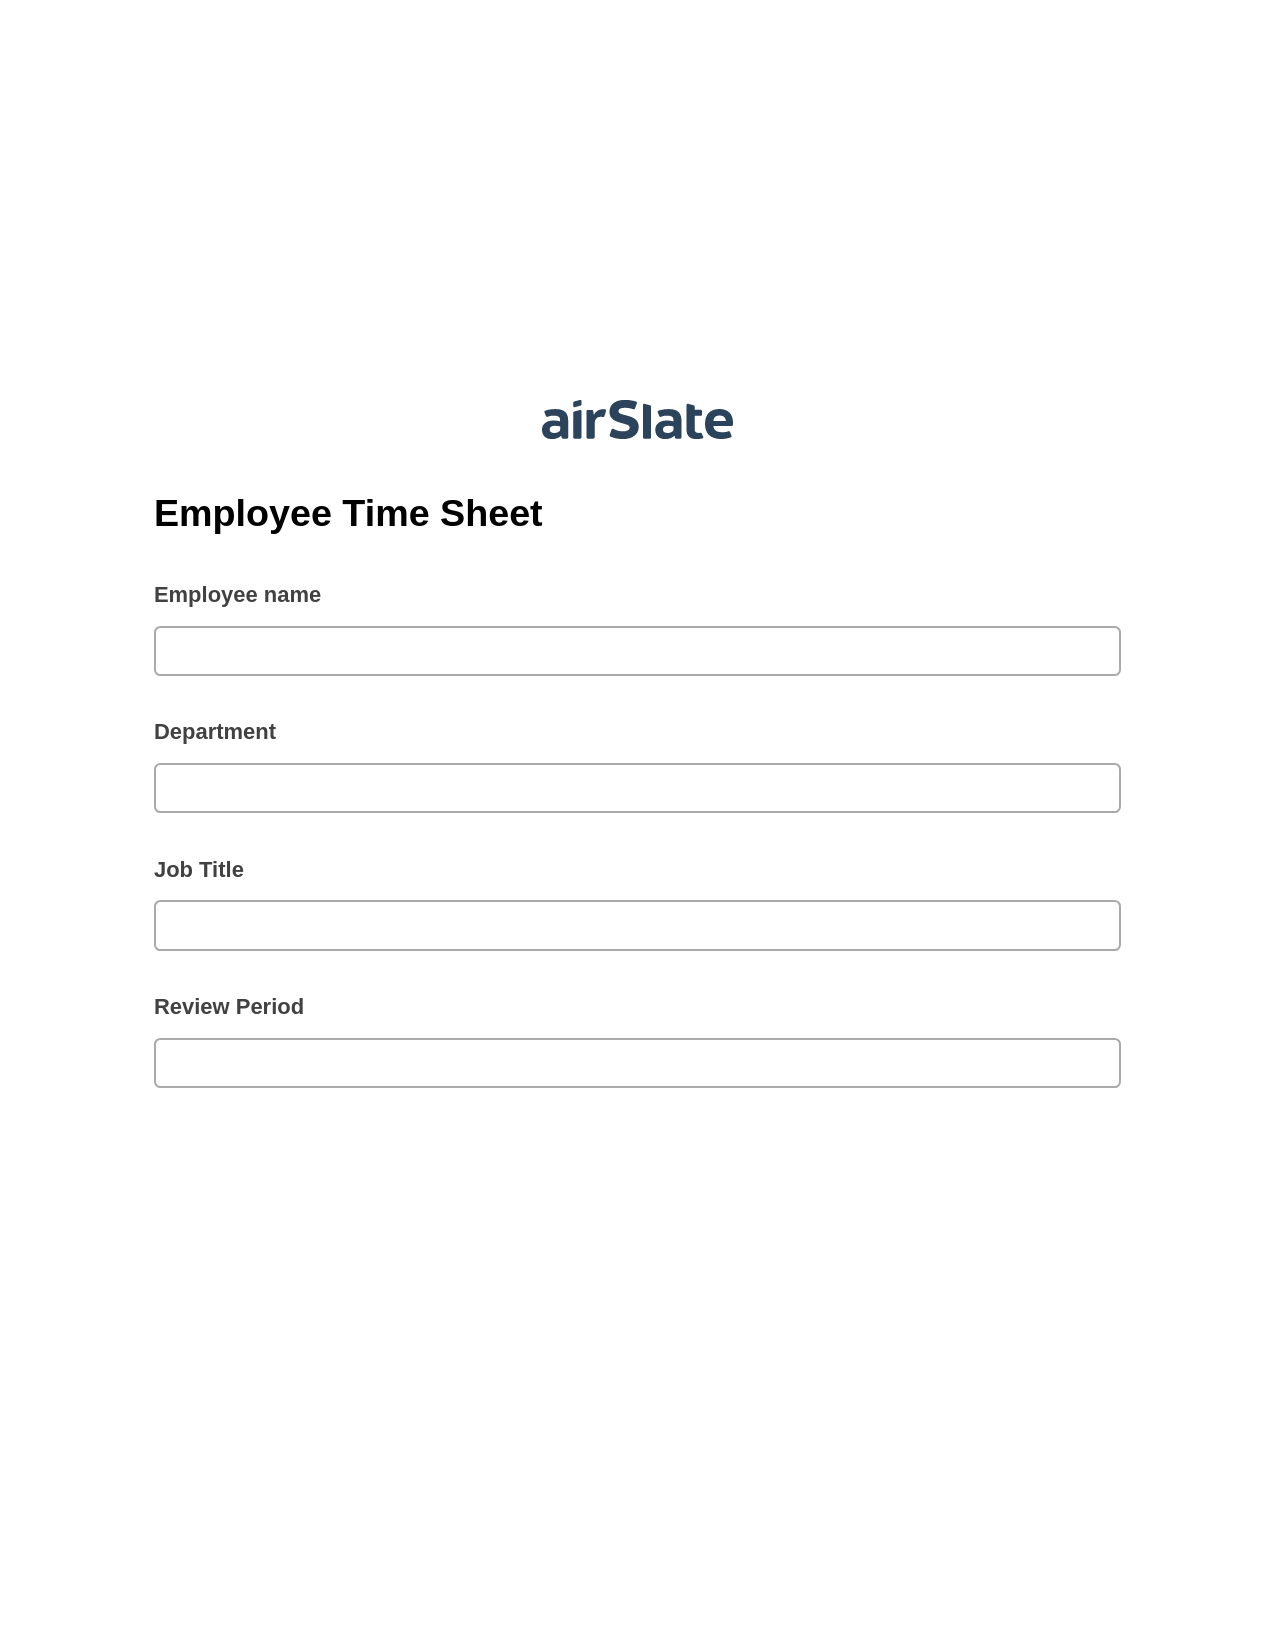 Multirole Employee Time Sheet Pre-fill from Litmos bot, Create slate addon, Export to NetSuite Bot